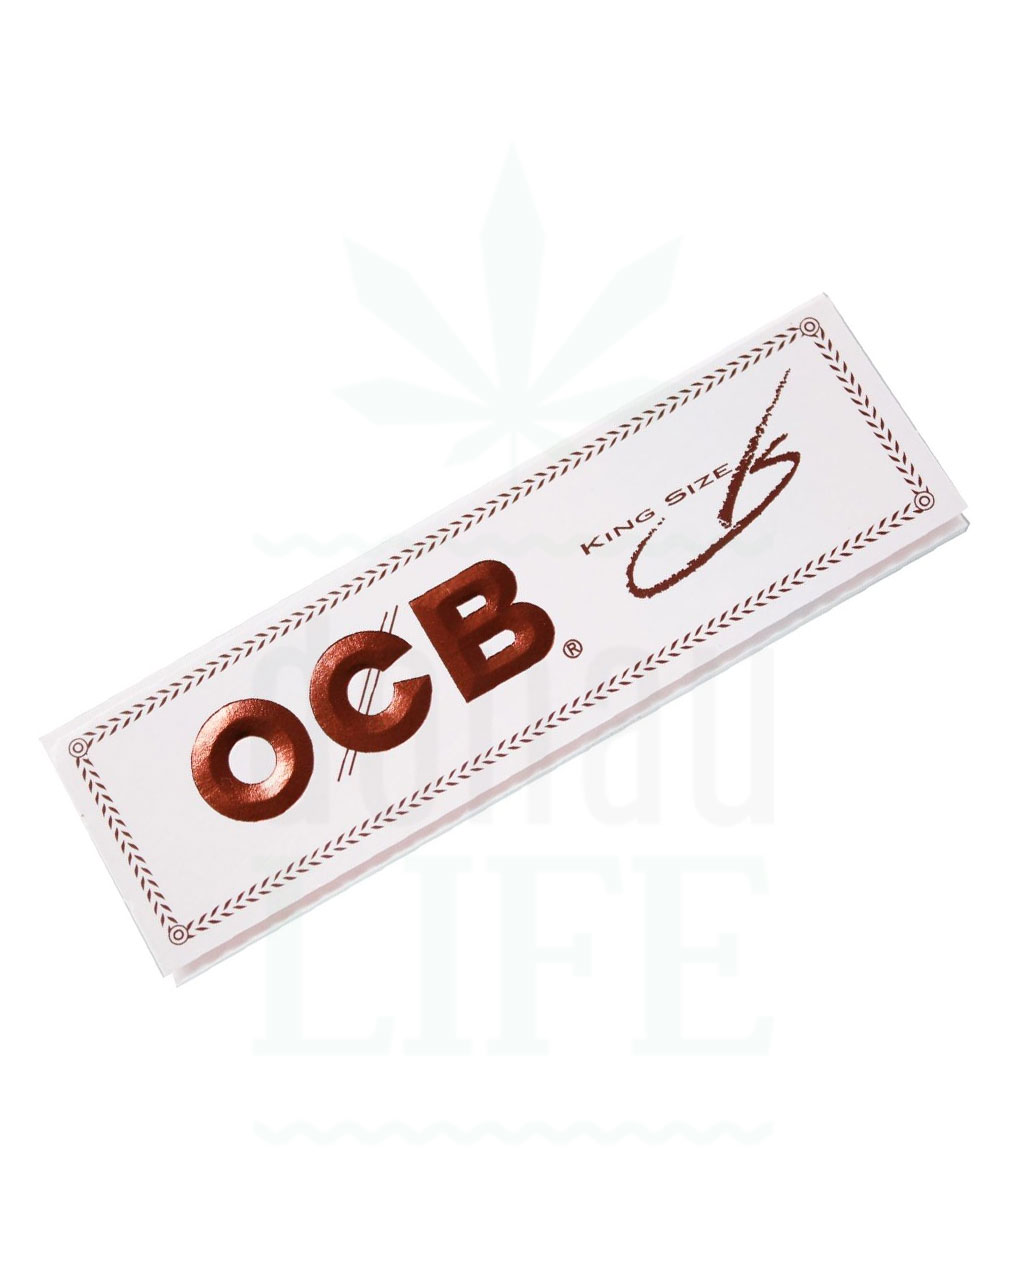 Headshop OCB KS Premium Papers | 32 Blatt